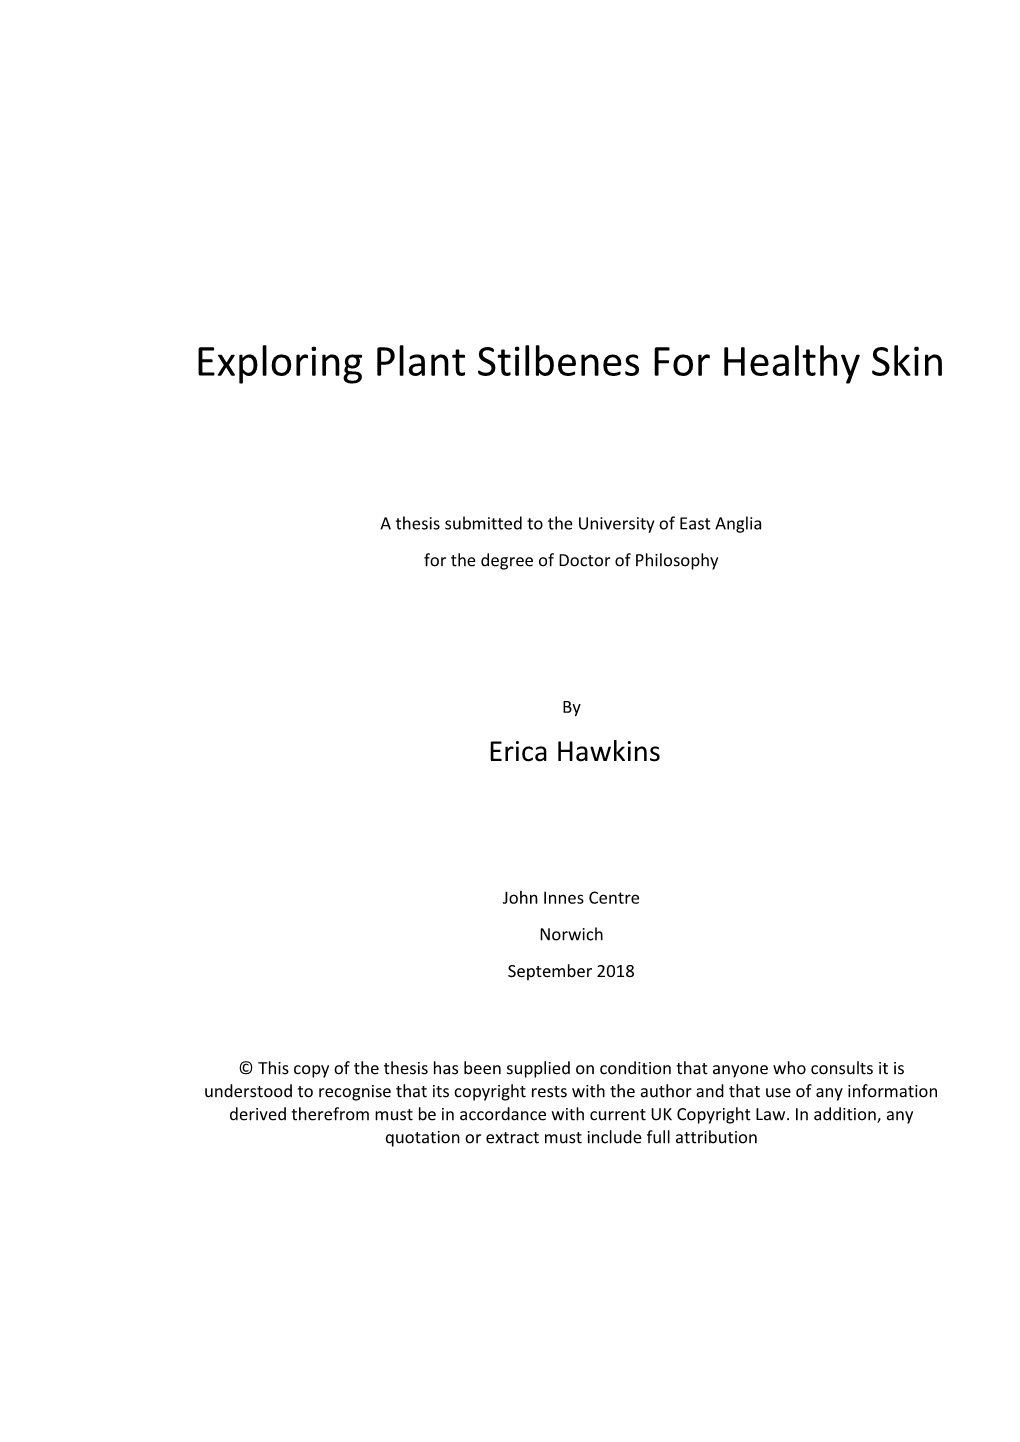 Exploring Plant Stilbenes for Healthy Skin